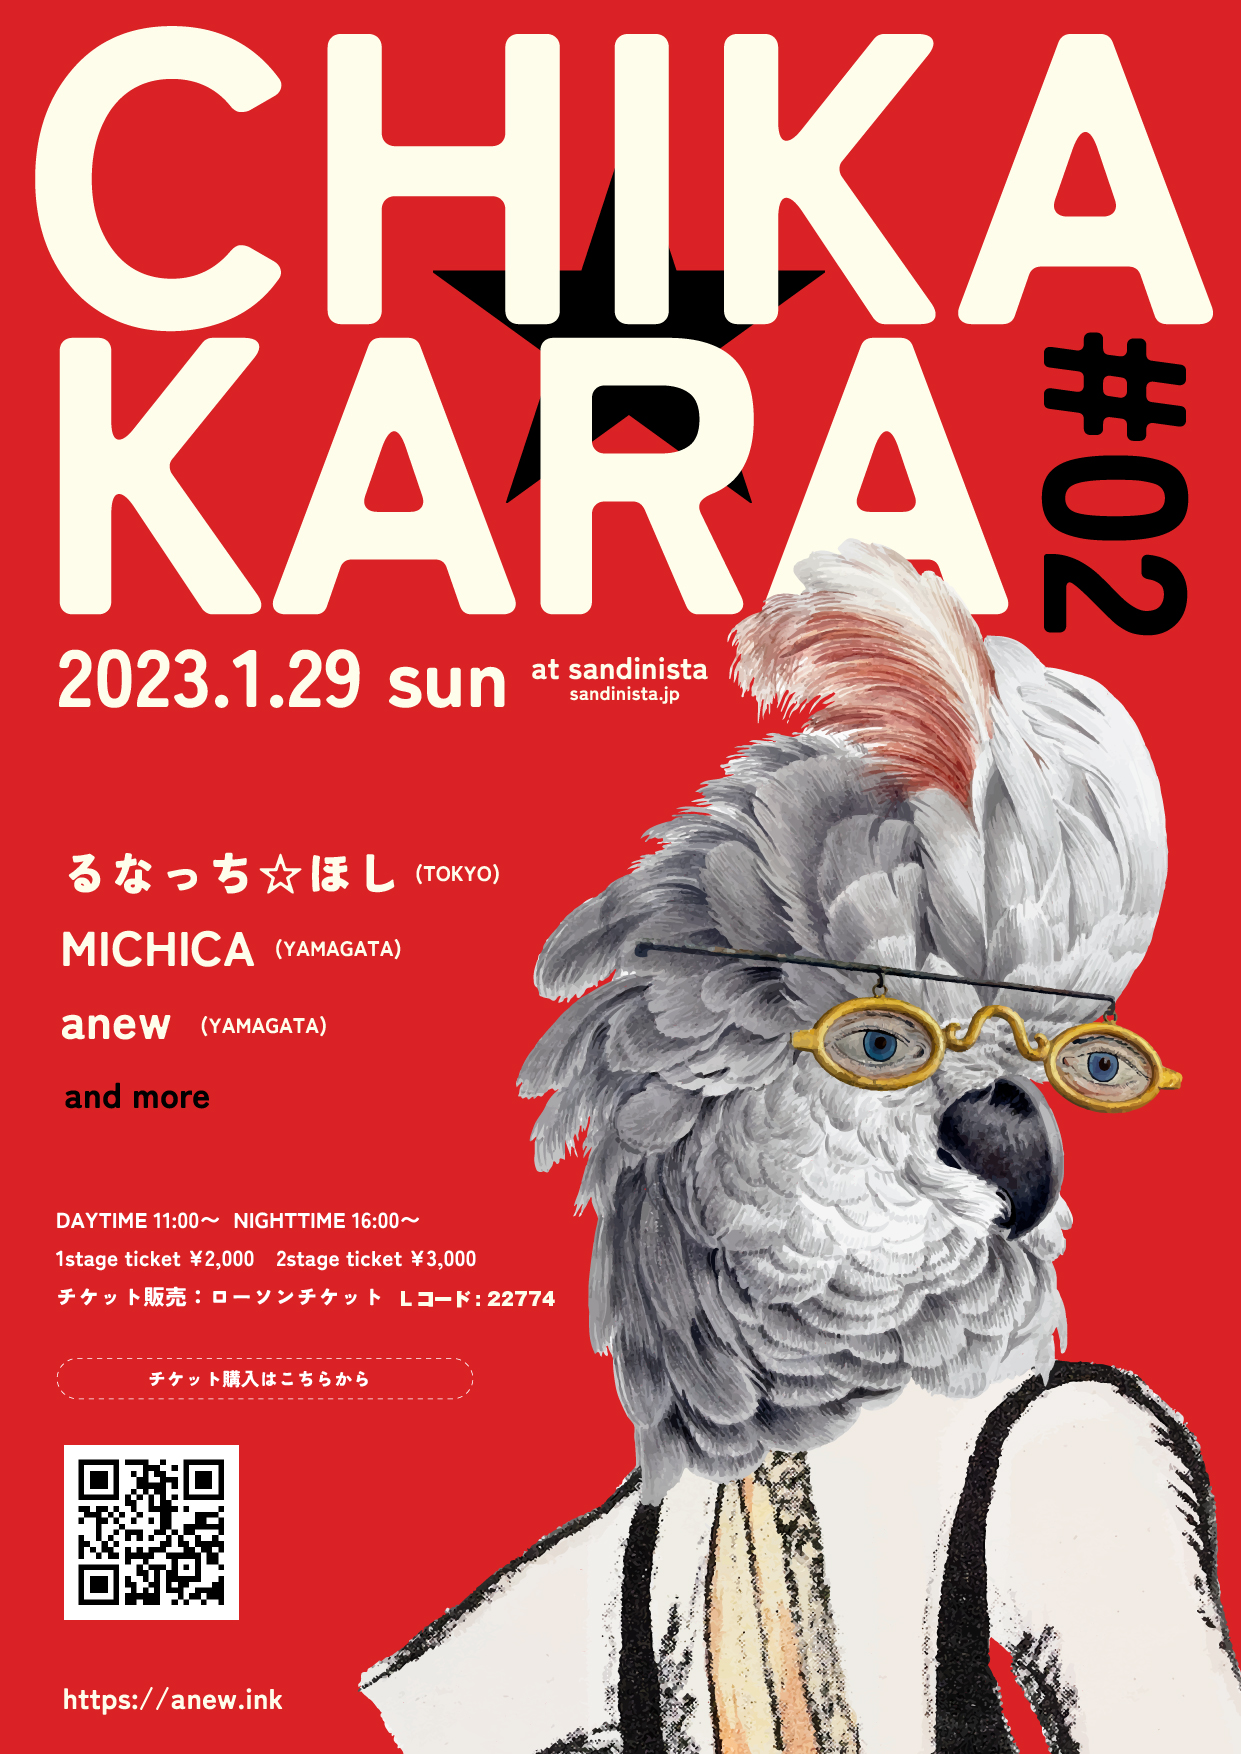 anew月例定期公演『CHIKAKARA vol.2』